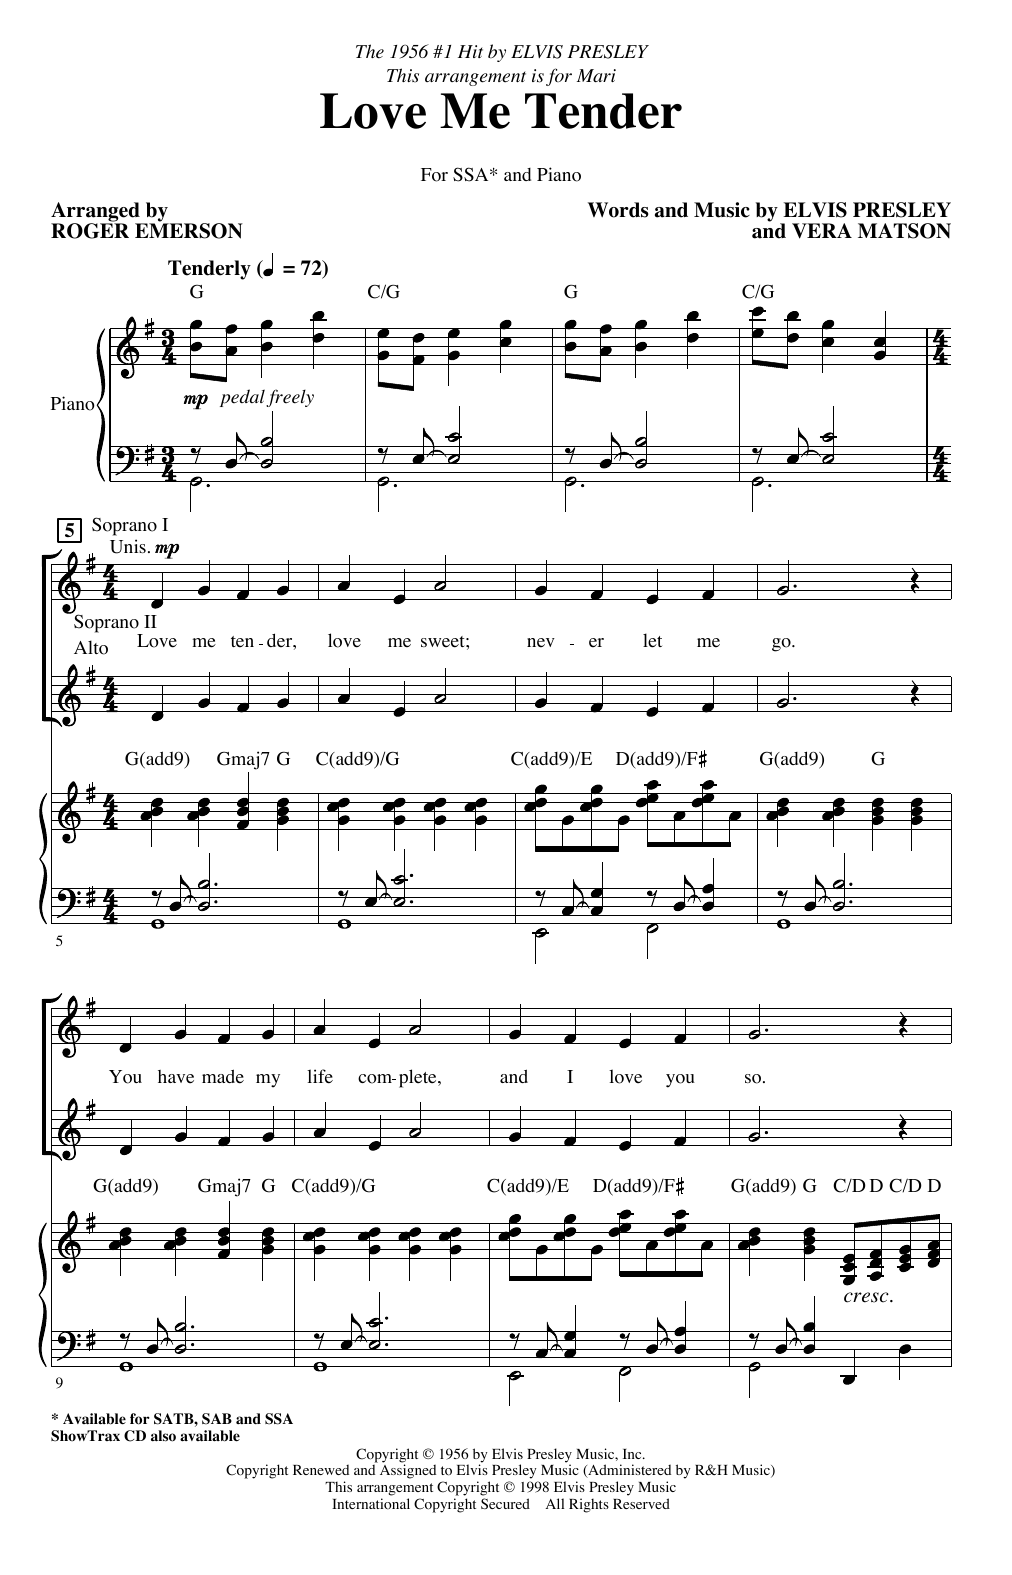 Elvis Presley Love Me Tender (arr. Roger Emerson) Sheet Music Notes & Chords for SATB Choir - Download or Print PDF